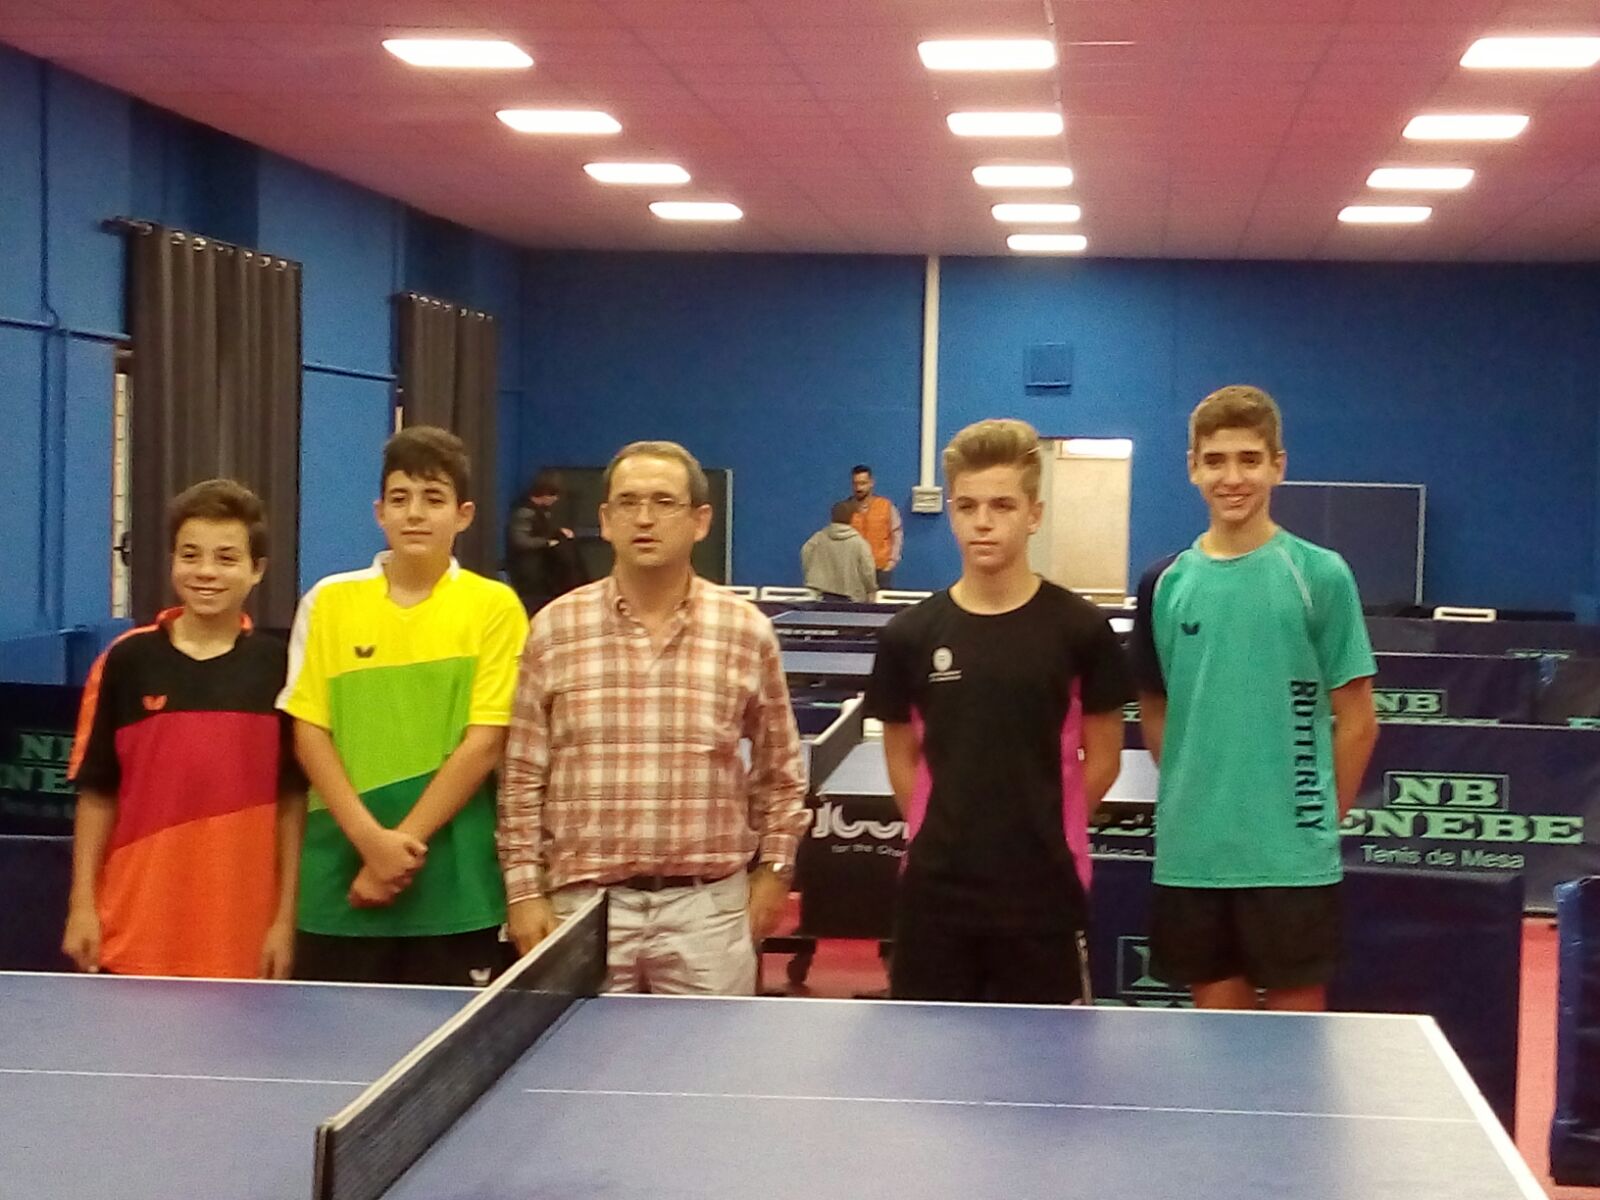 Campionat Provincial de Tennis Taula. Categoria Infantil Masculí